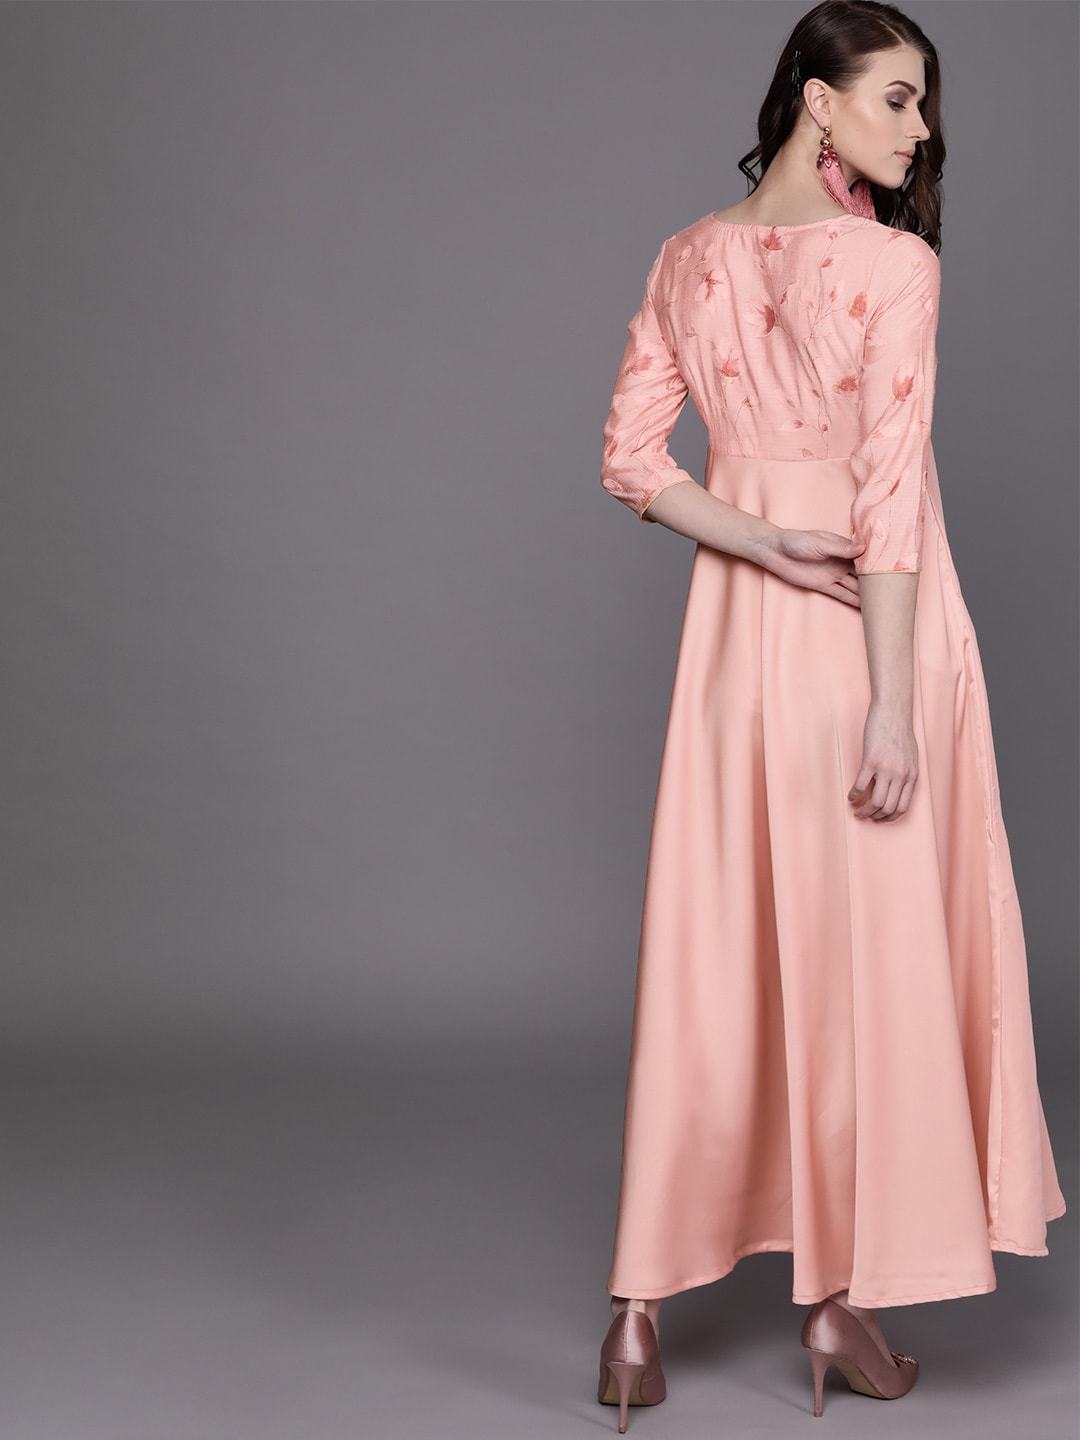 Women's  Pink Printed Detail Satin Finish Empire Maxi Dress - AKS